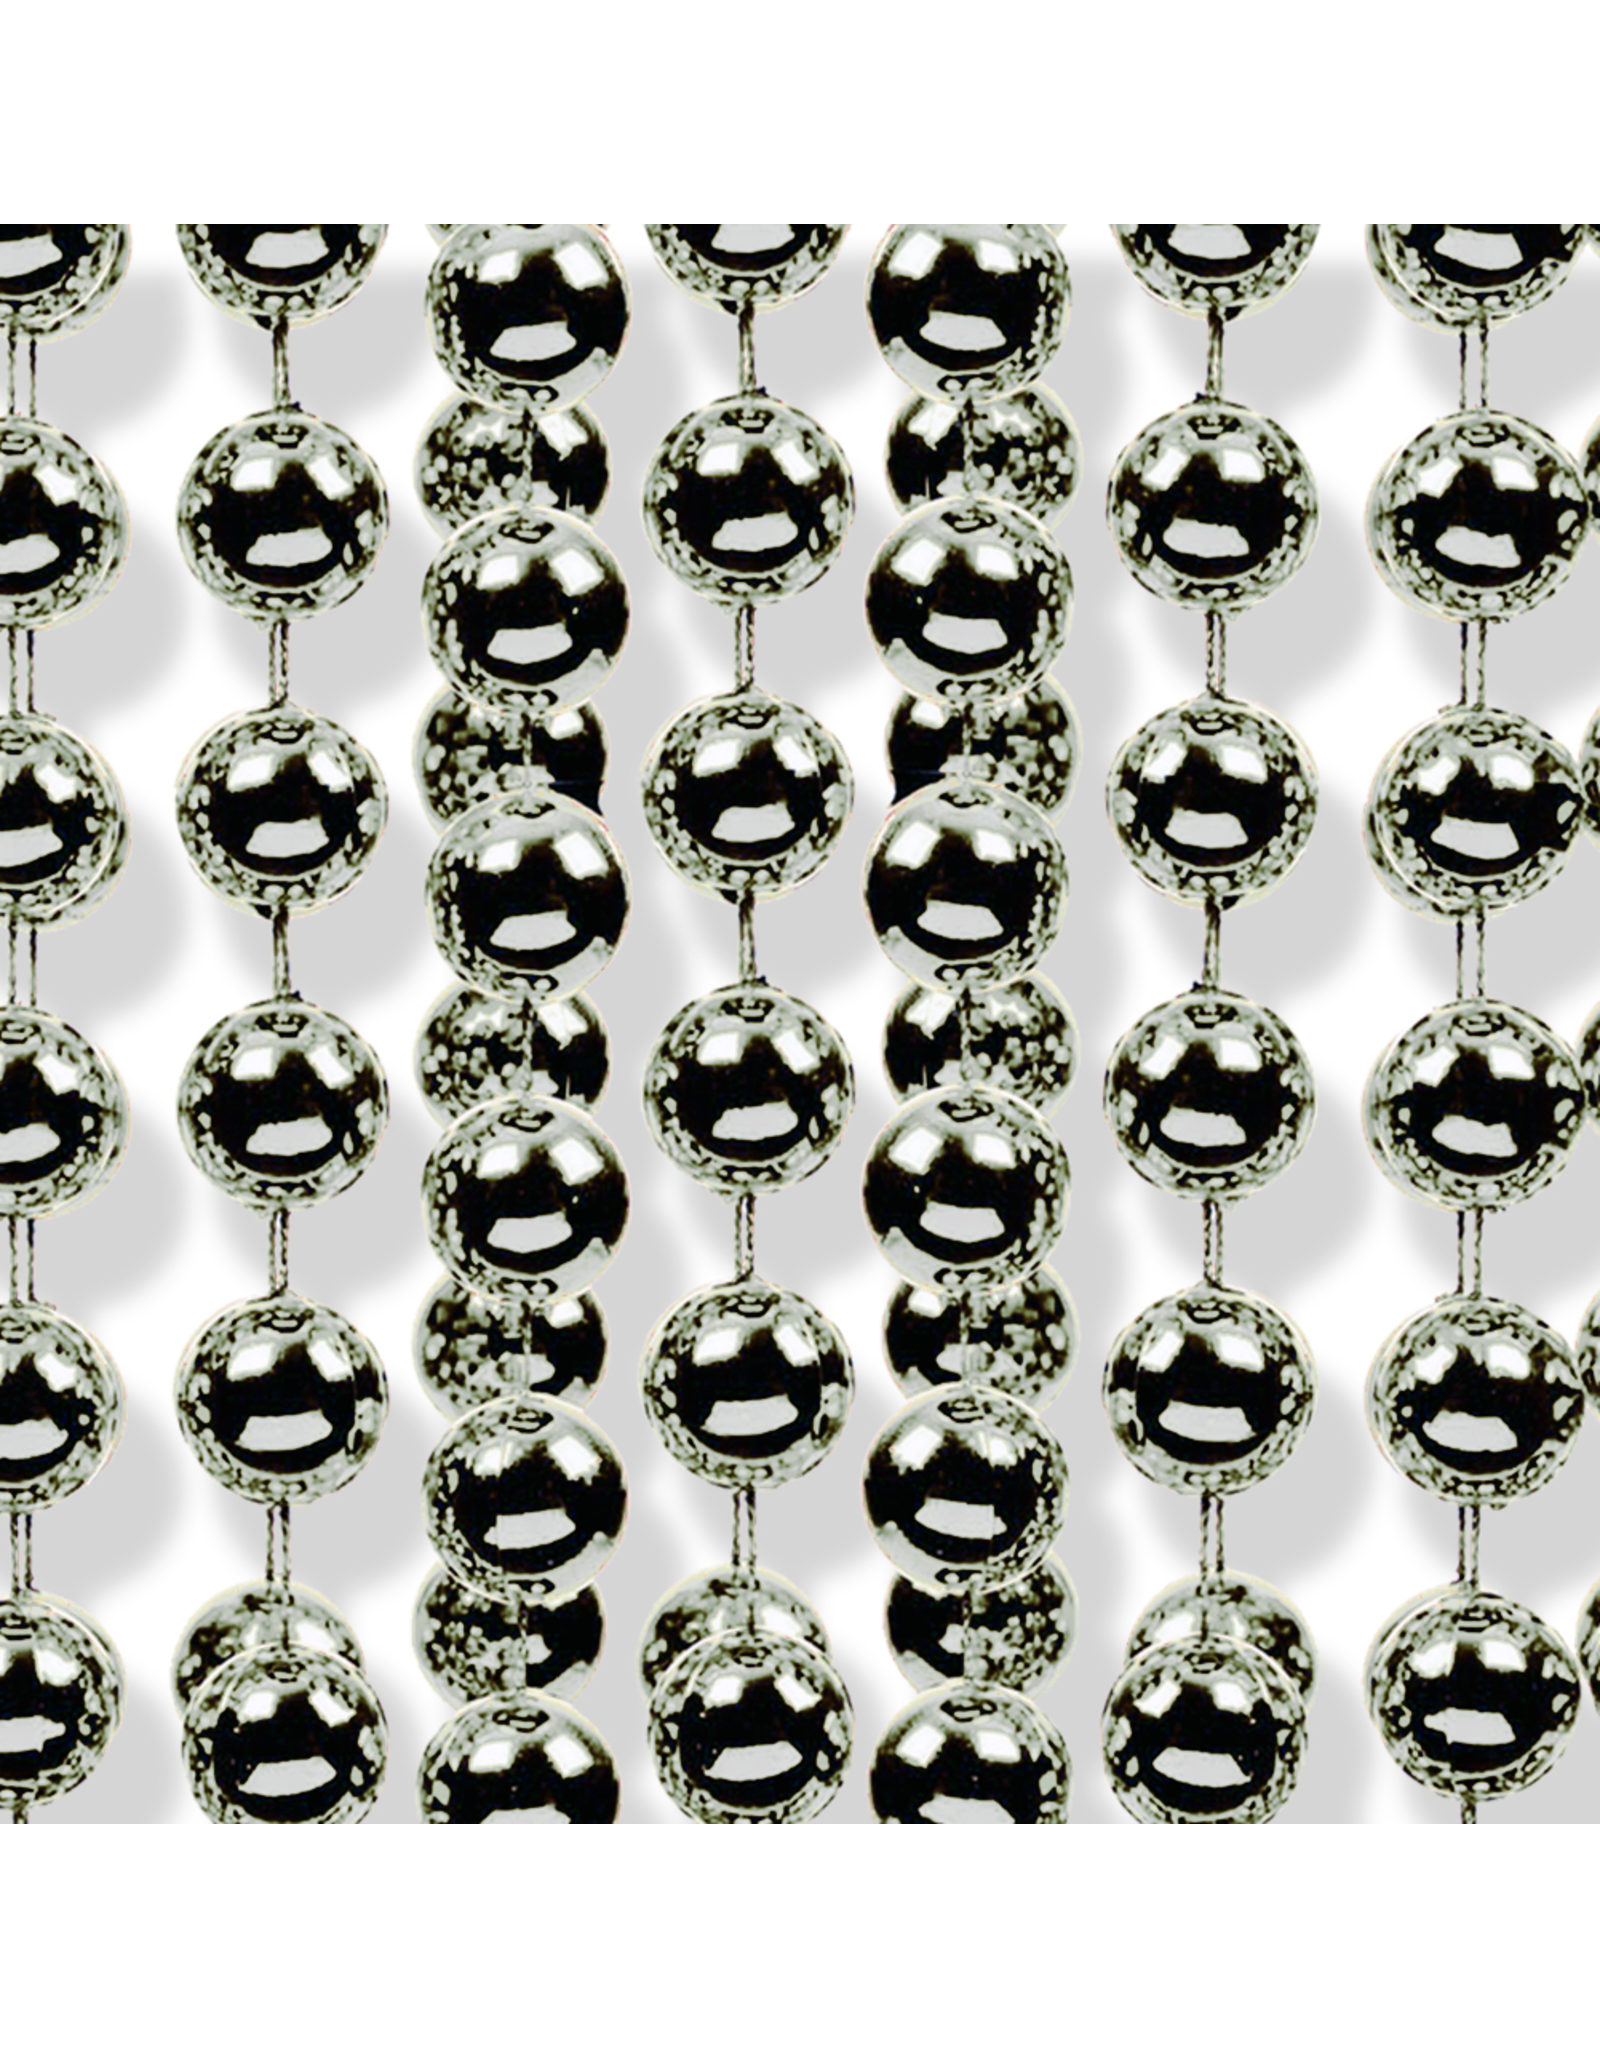 Kurt Adler Silver Beaded Garland 18ft 8mm Shatter-proof Beads